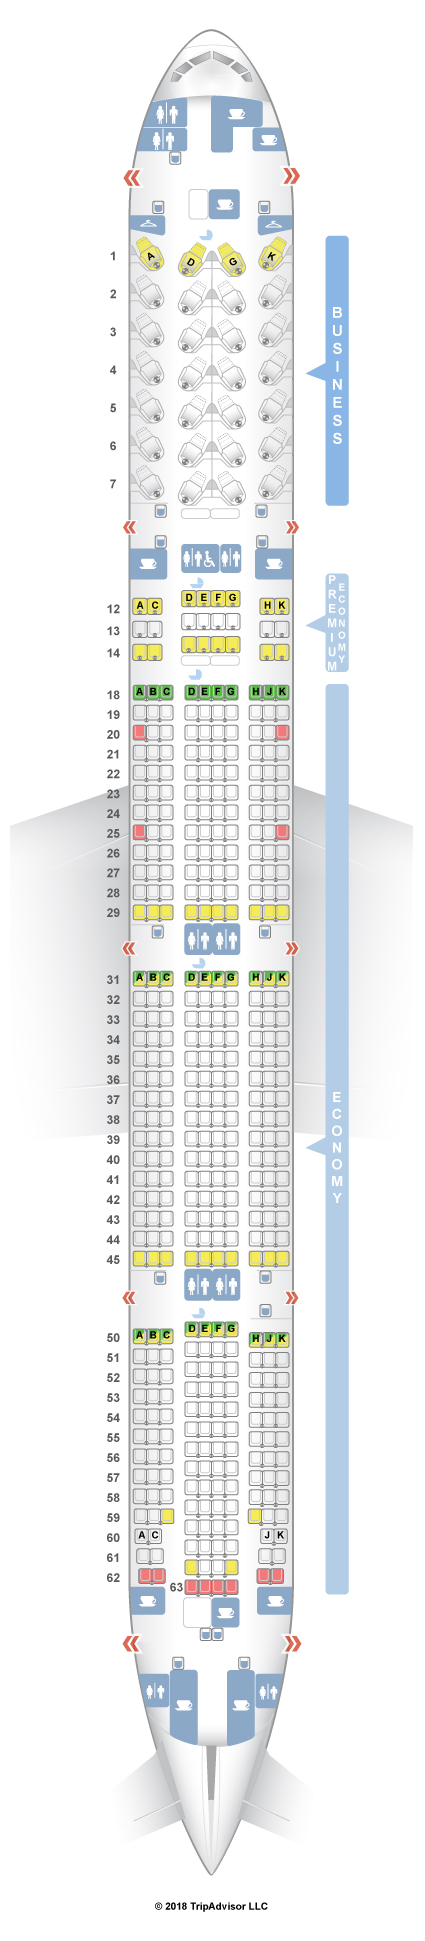 air canada 777 300 business class seats